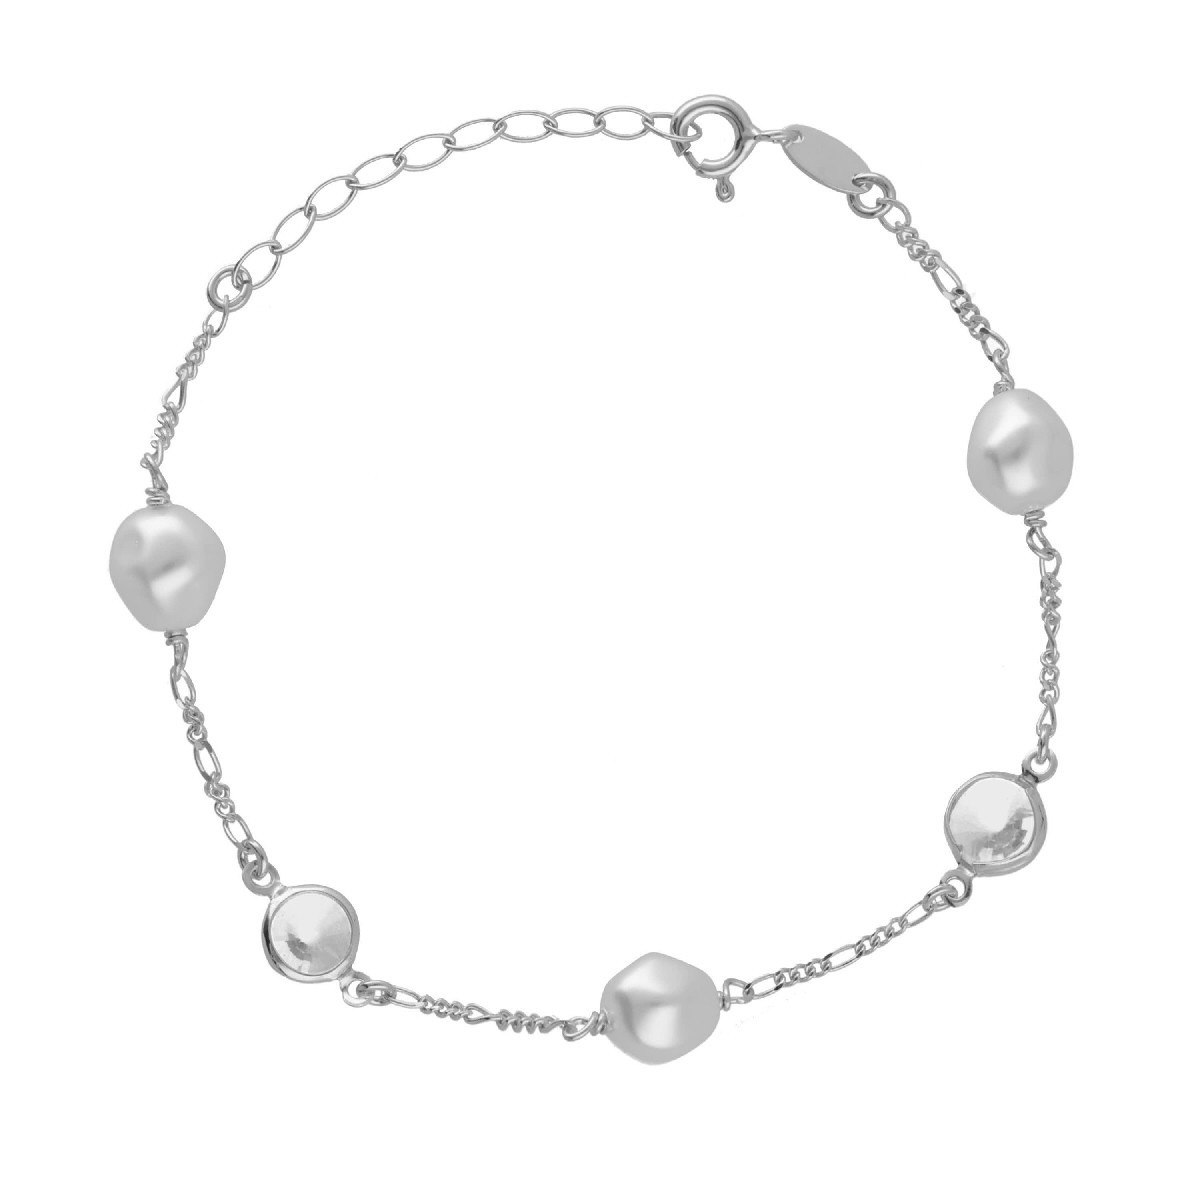 Victoria Cruz Inspire sterling silver adjustable bracelet with blue crystal  in rectangle shape